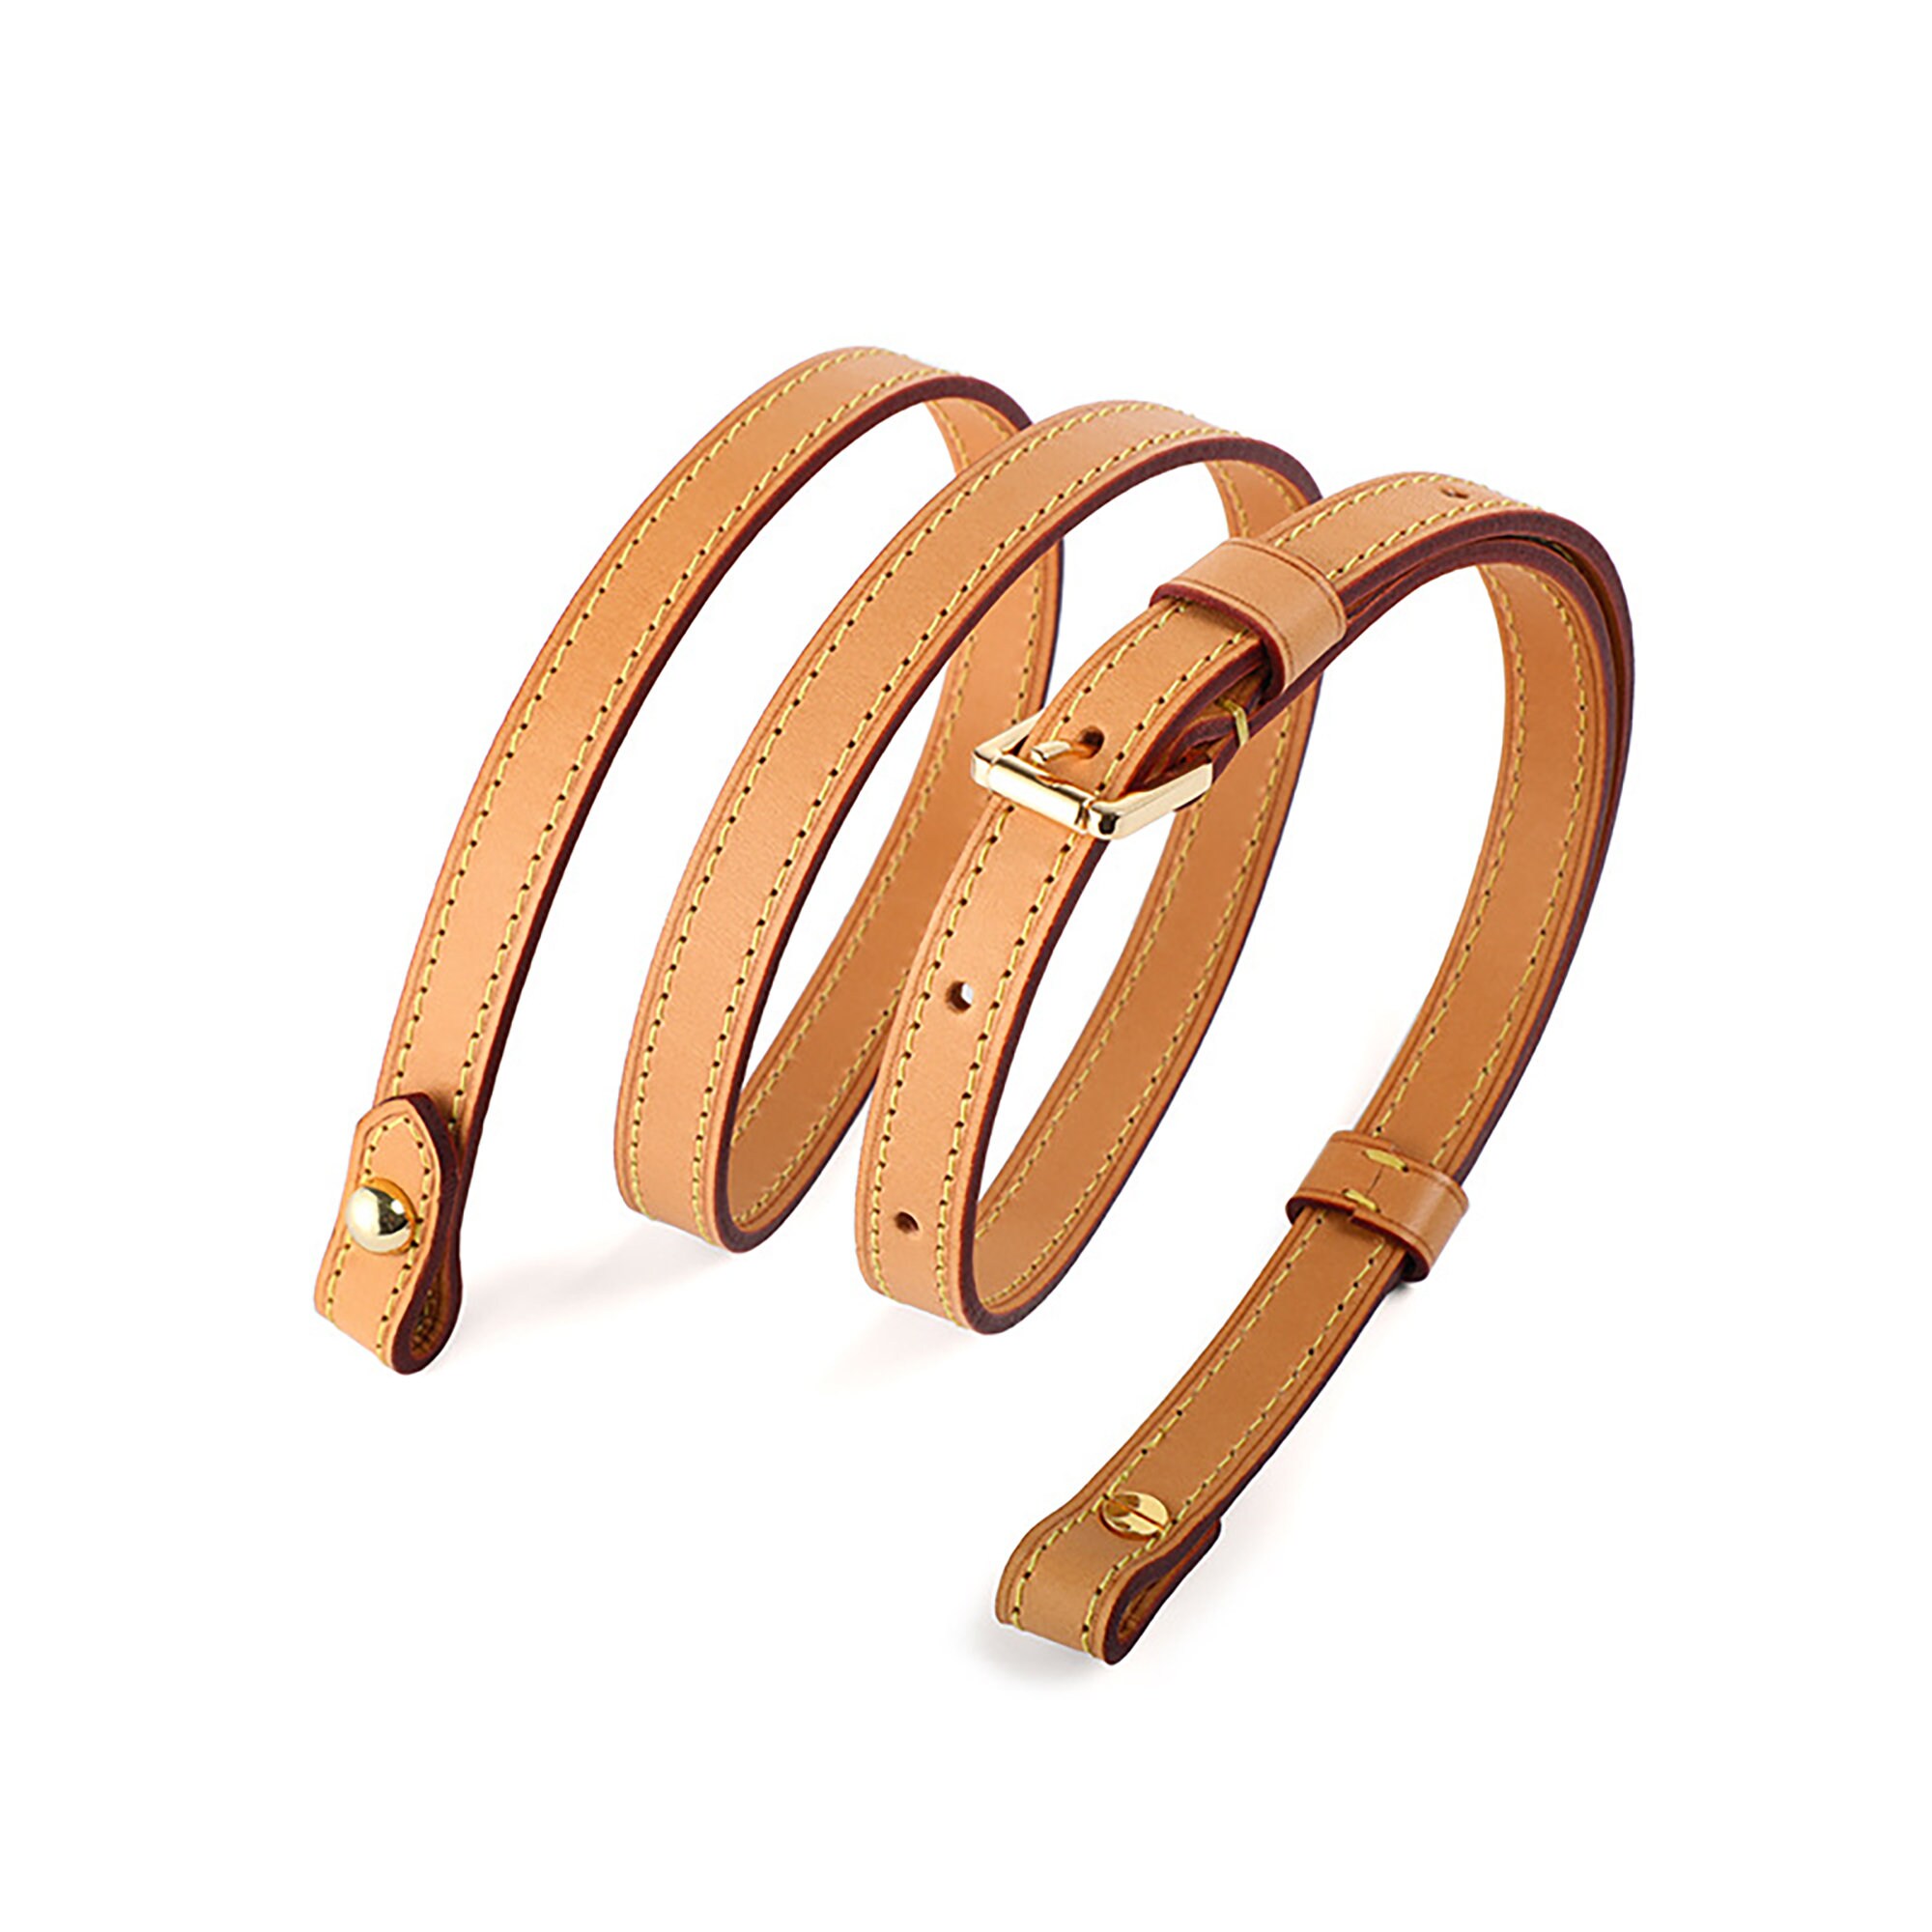 Mcraft® Vachette Leather Strap Extender Compatible With Croissant